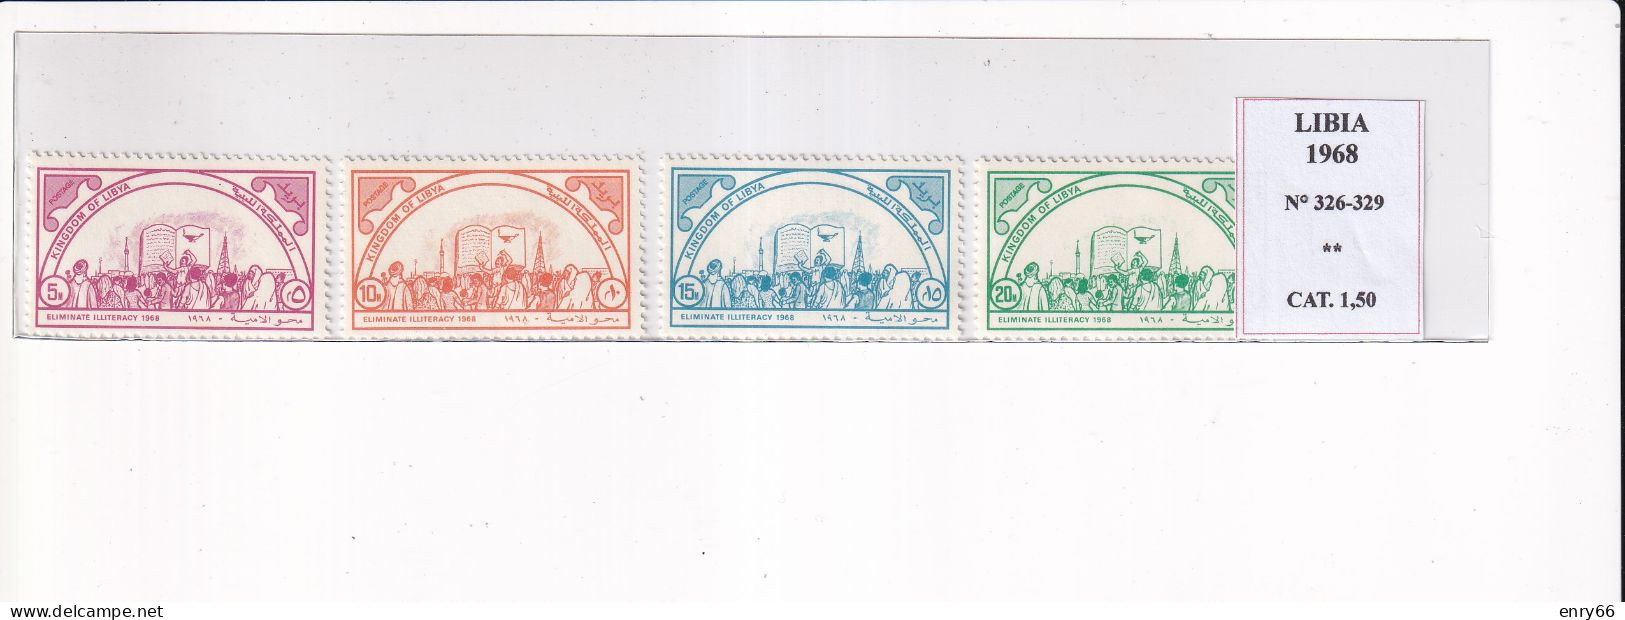 LIBIA 1968 N°326-329 MNH - Libia